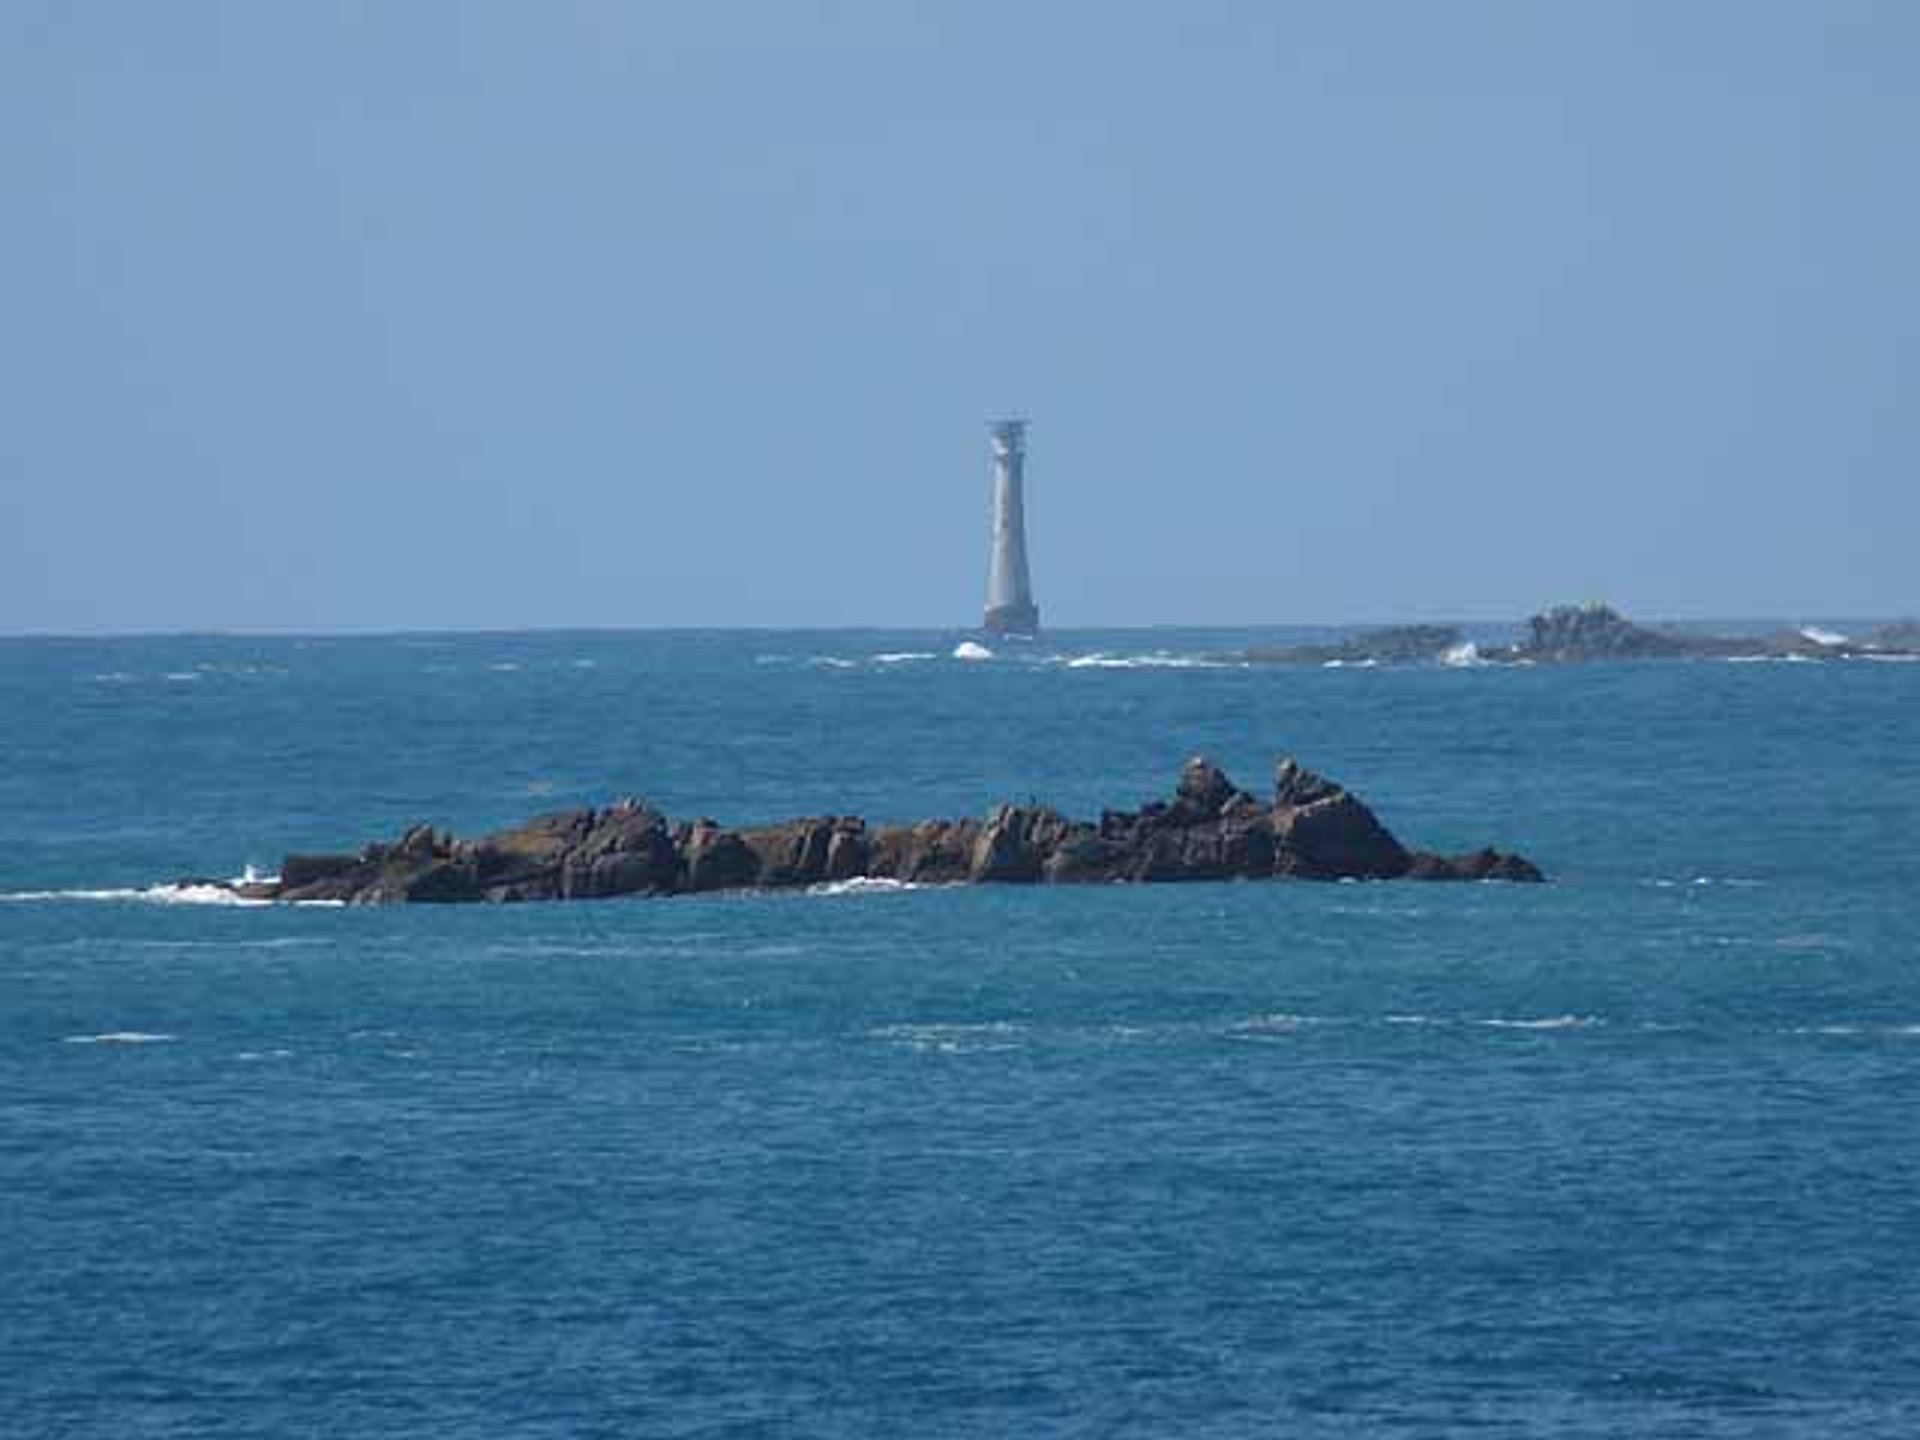 Bishop Rock Lighthouse